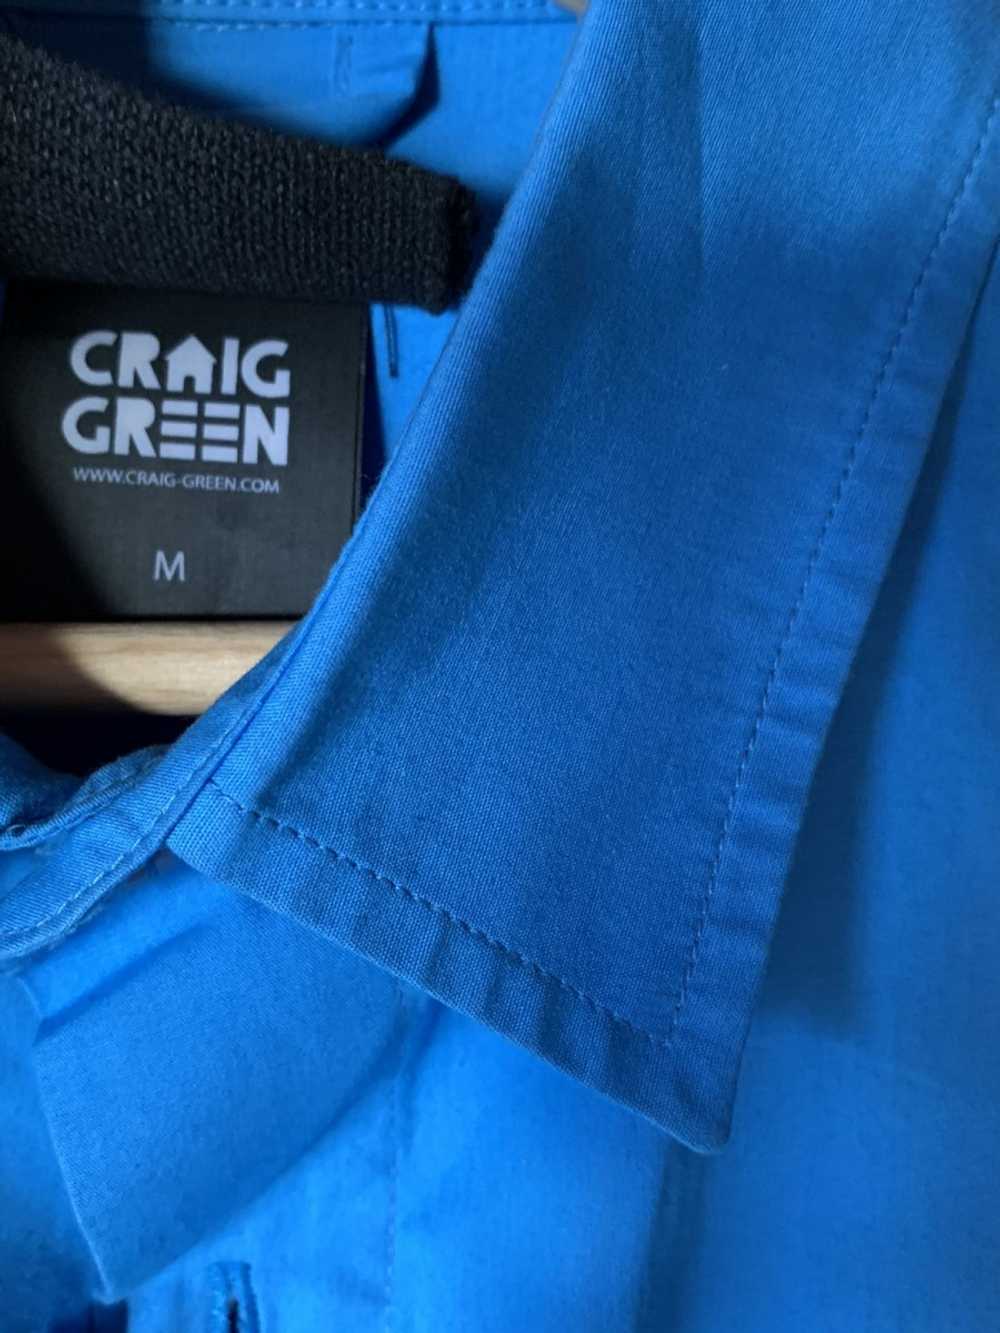 Craig green ss15 blue side split tie up shirt - image 4